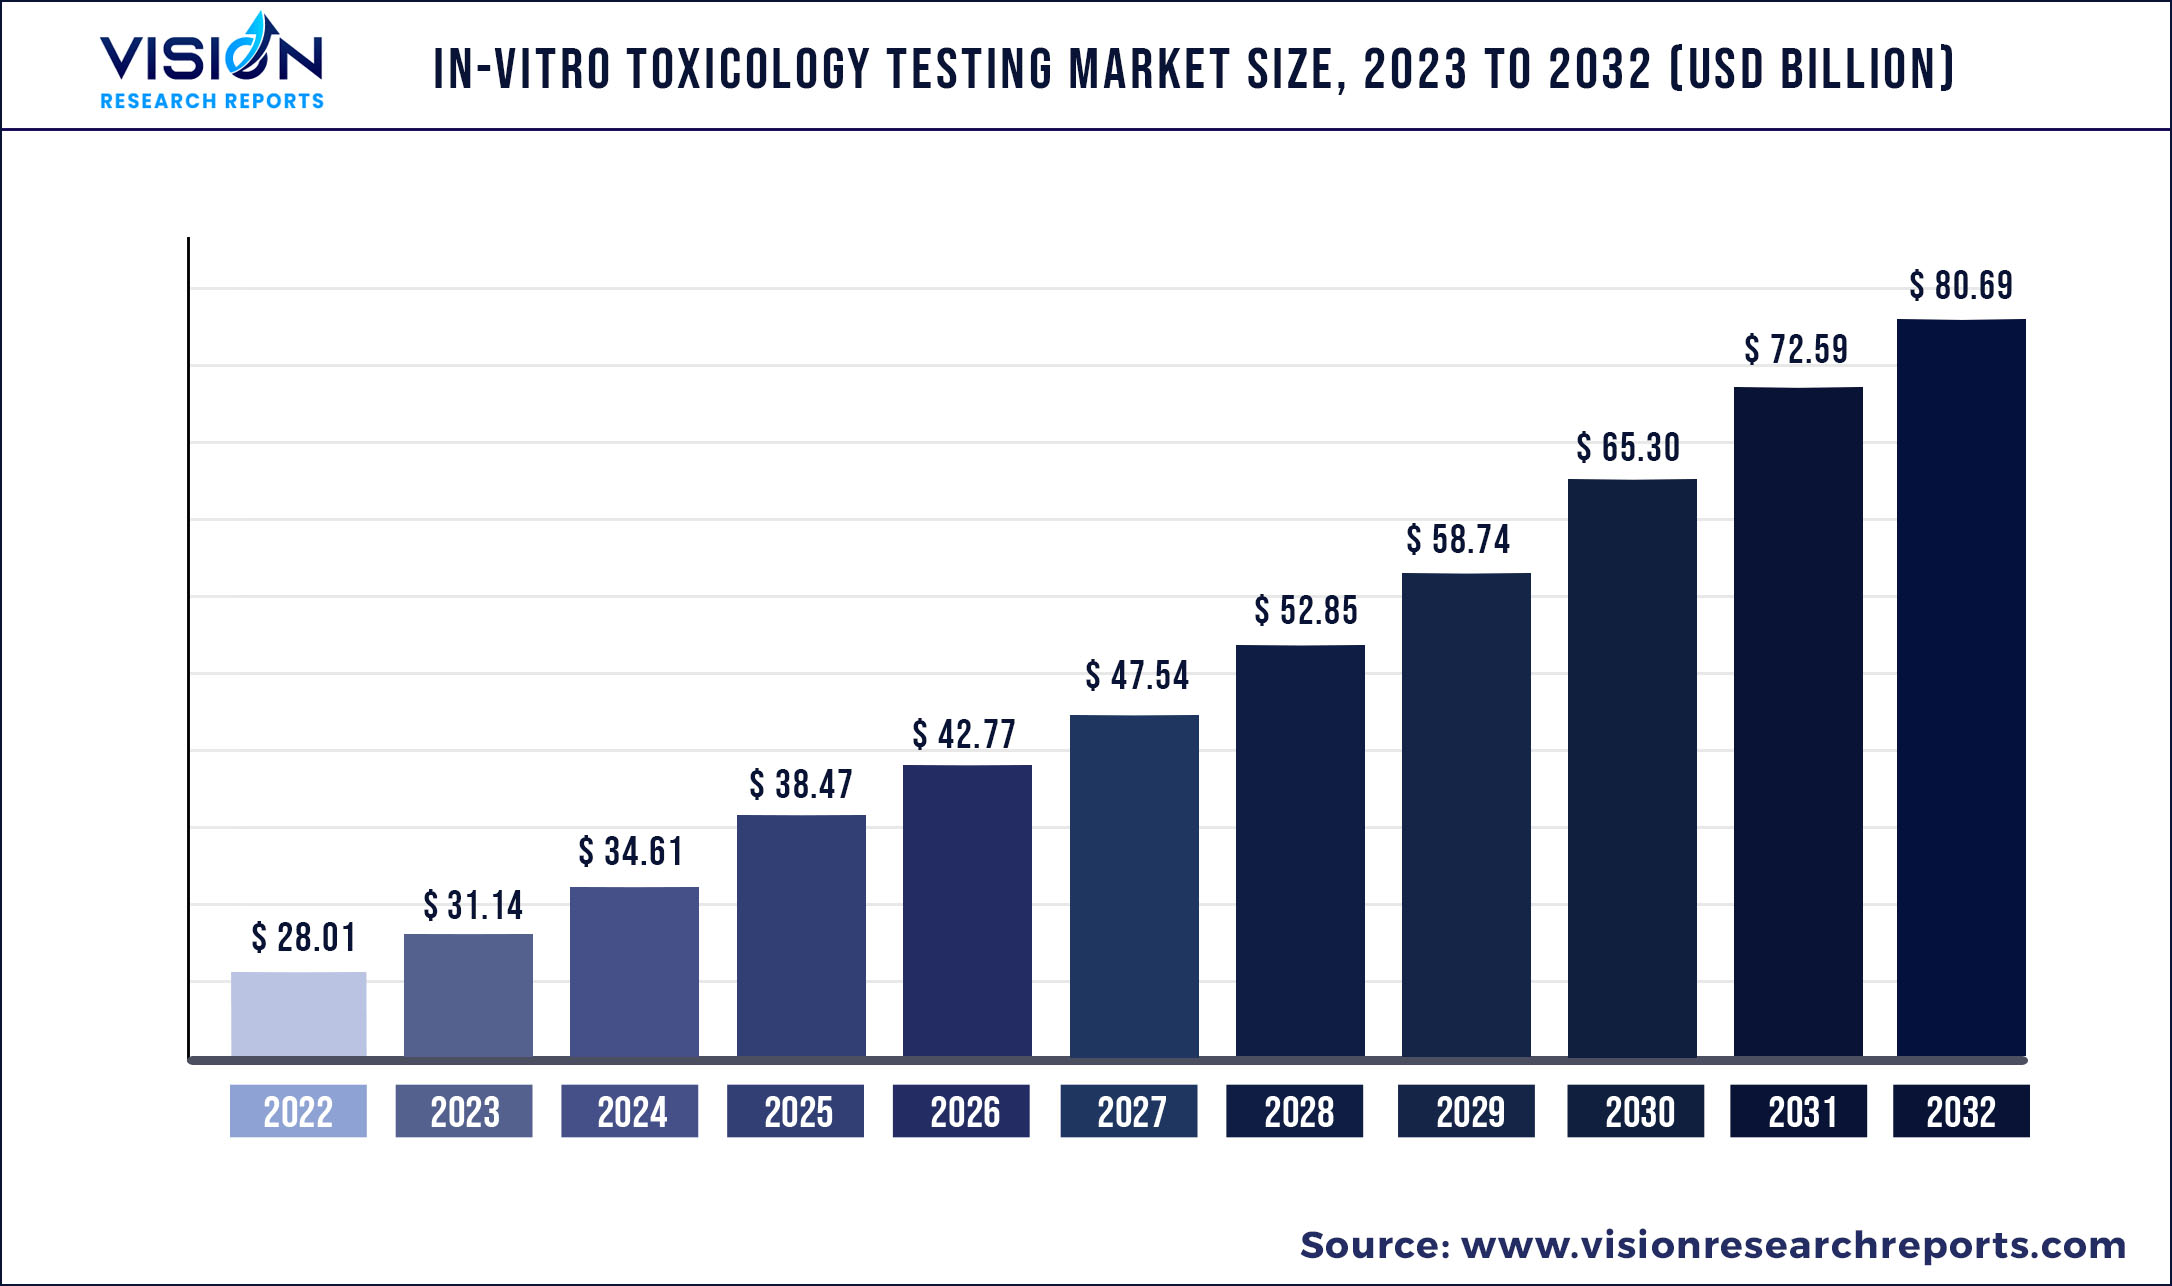 In-vitro Toxicology Testing Market Size 2023 to 2032